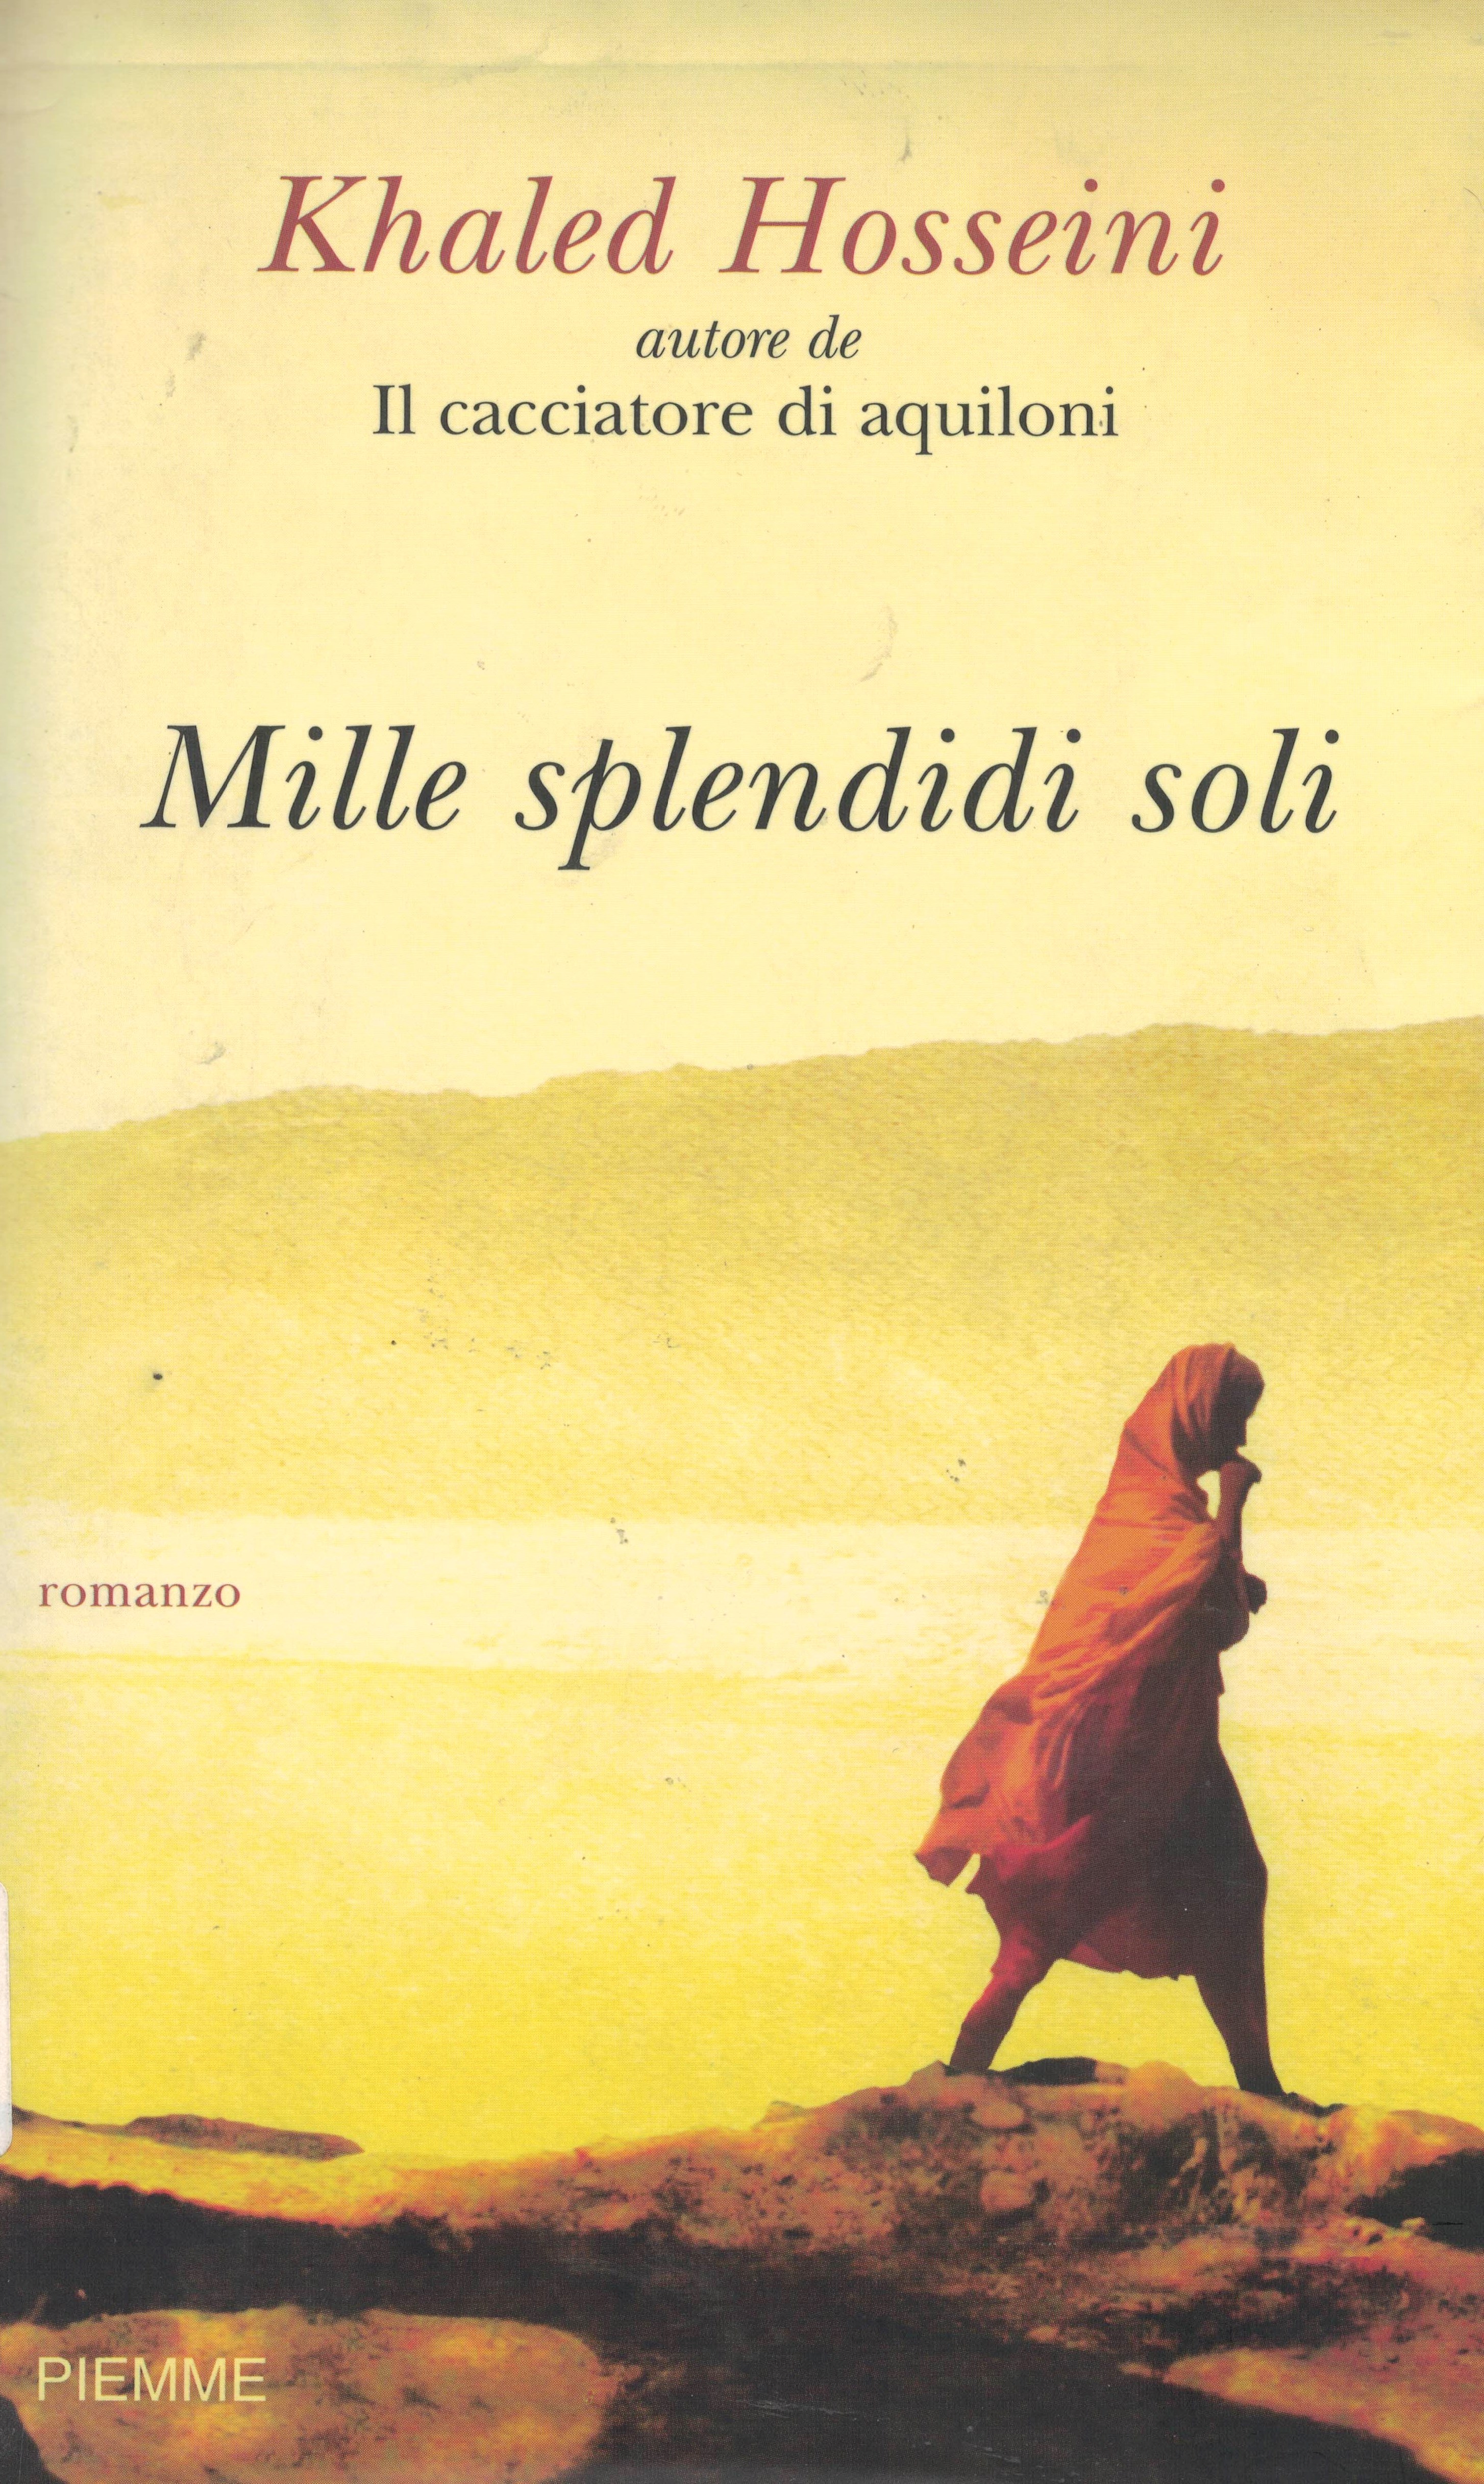 Khaled Hosseini: MILLE SPLENDIDI SOLI. Romanzo. Traduzione di Isabella Vaj.  – Biblioteca Teresa Gullace